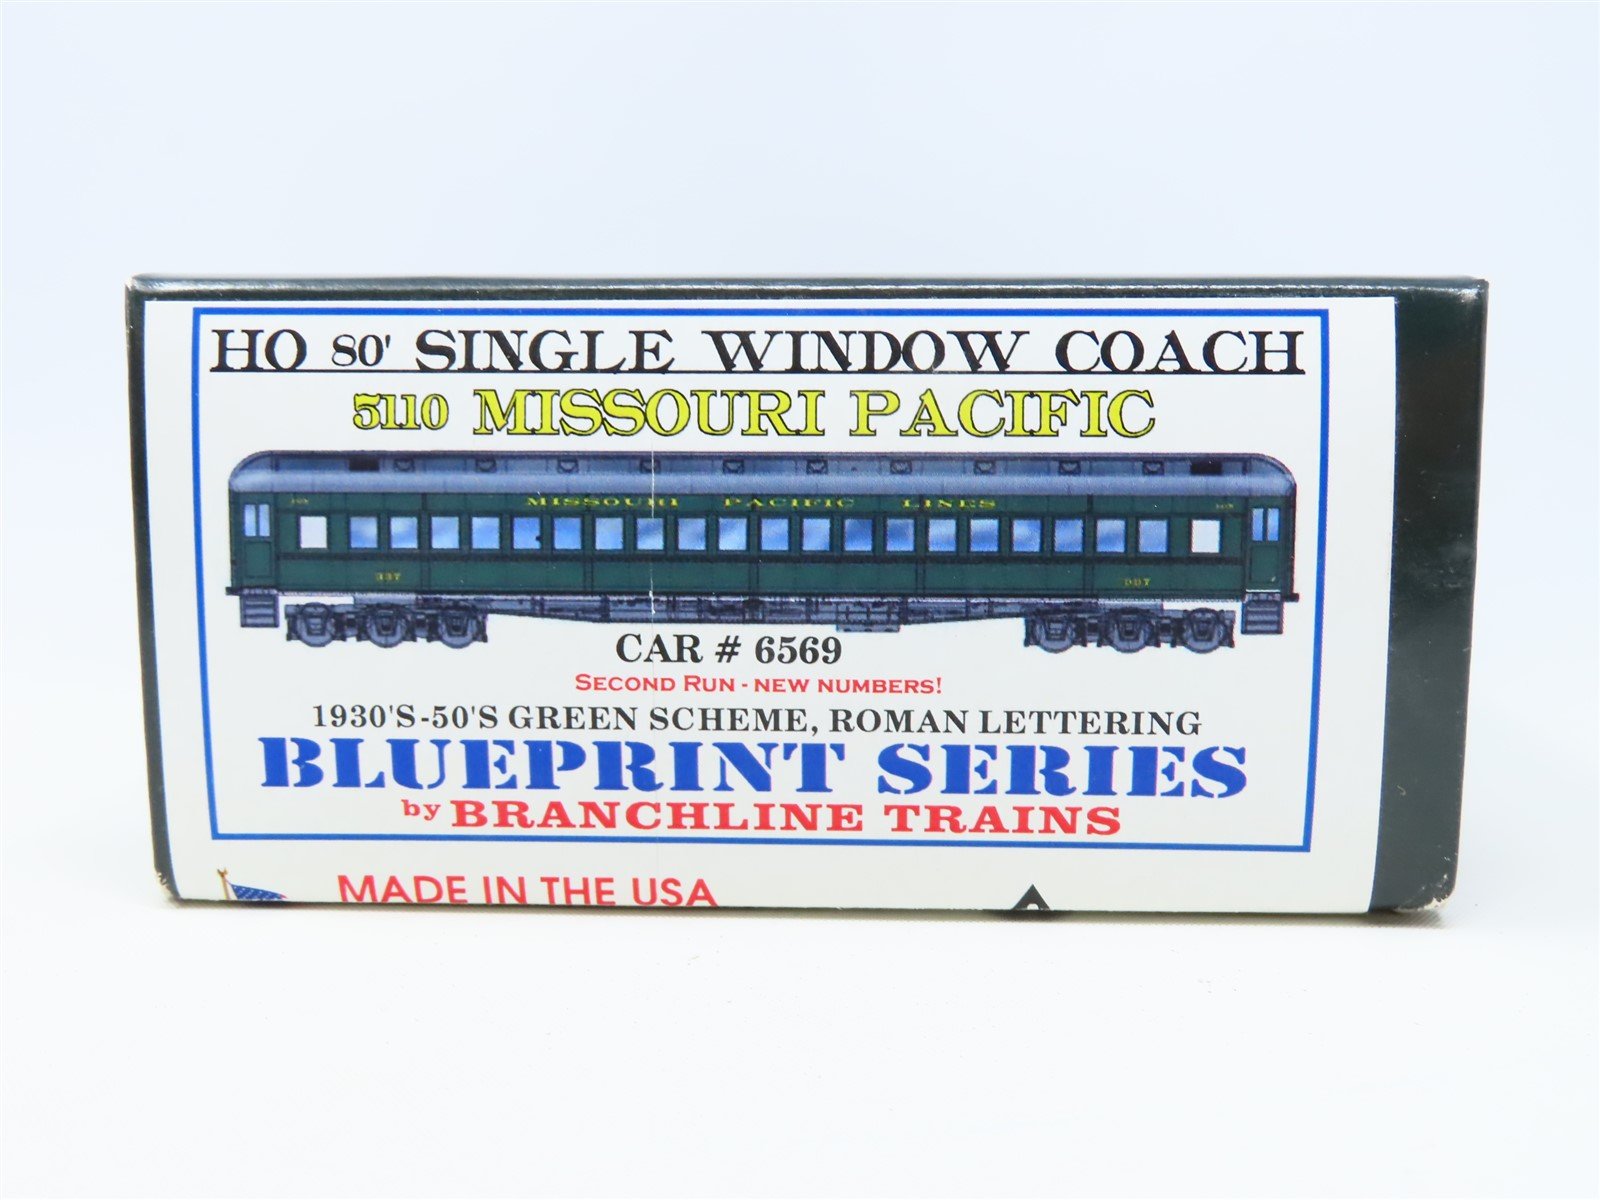 HO Branchline Blueprint Series Kit 5110 MP Missouri Pacific 80' Coach Passenger